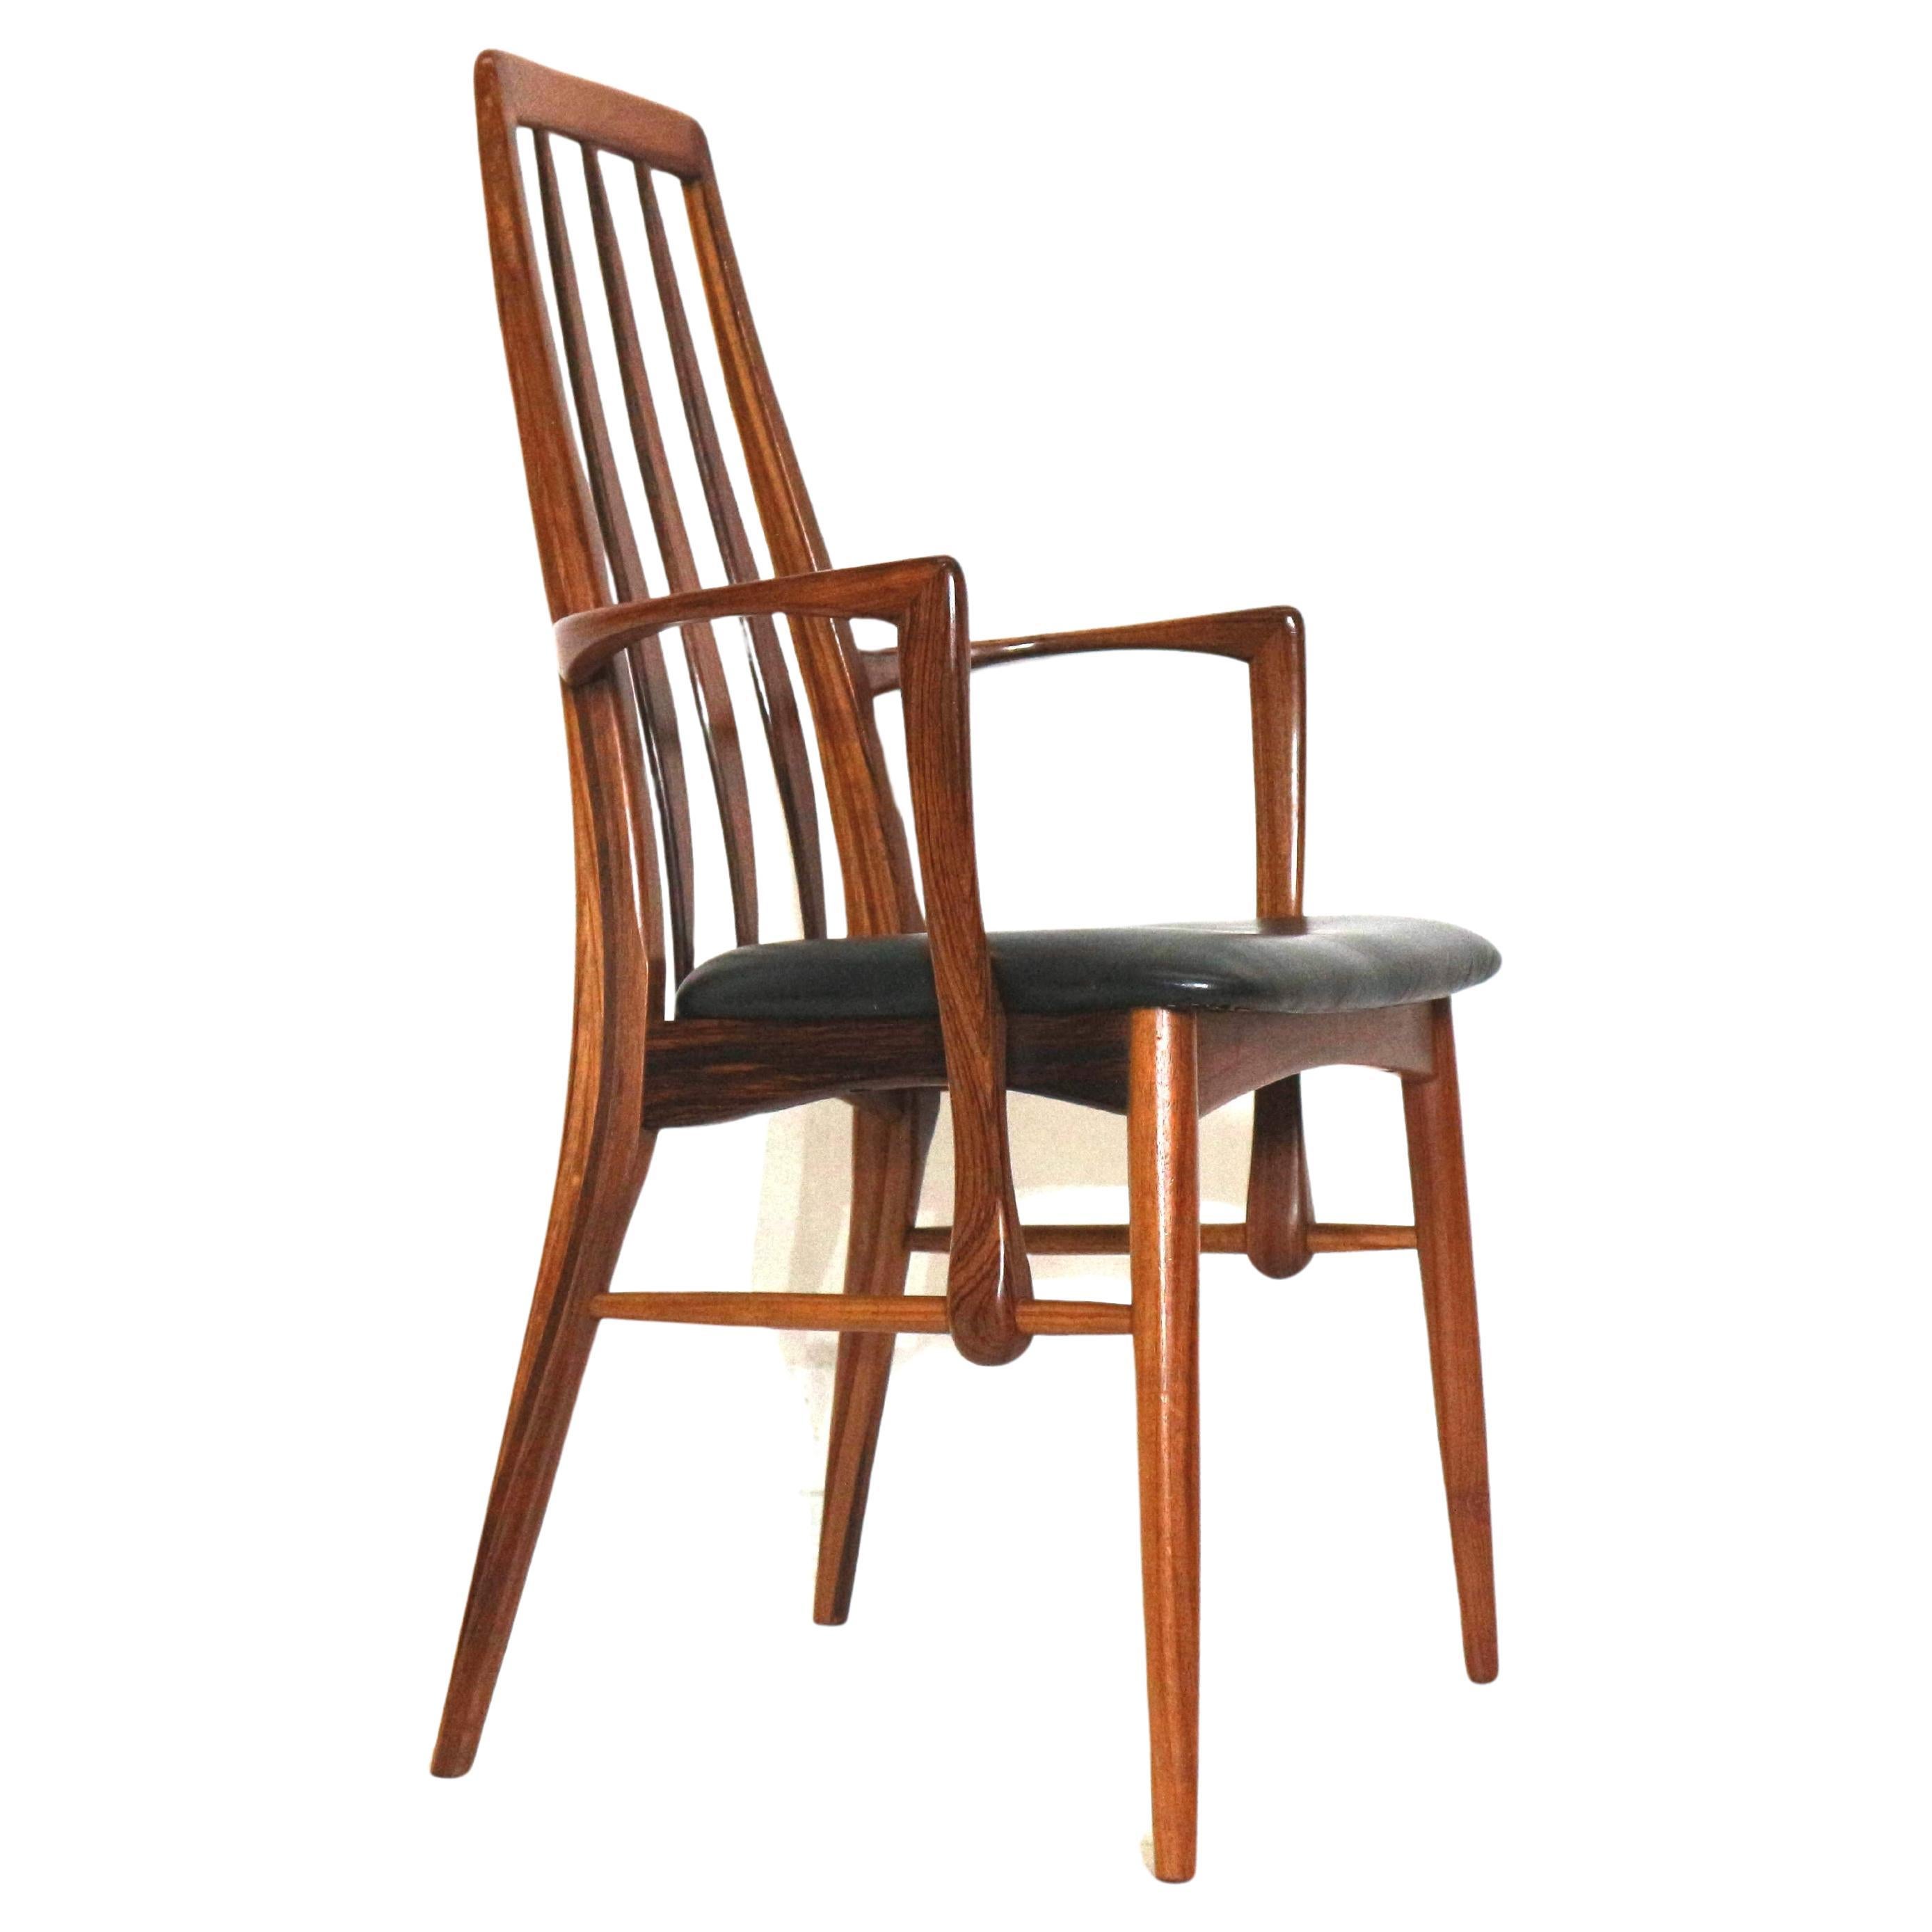 Rare rosewood chair / armchair by Niels Koefoed for Koefoeds Hornslet